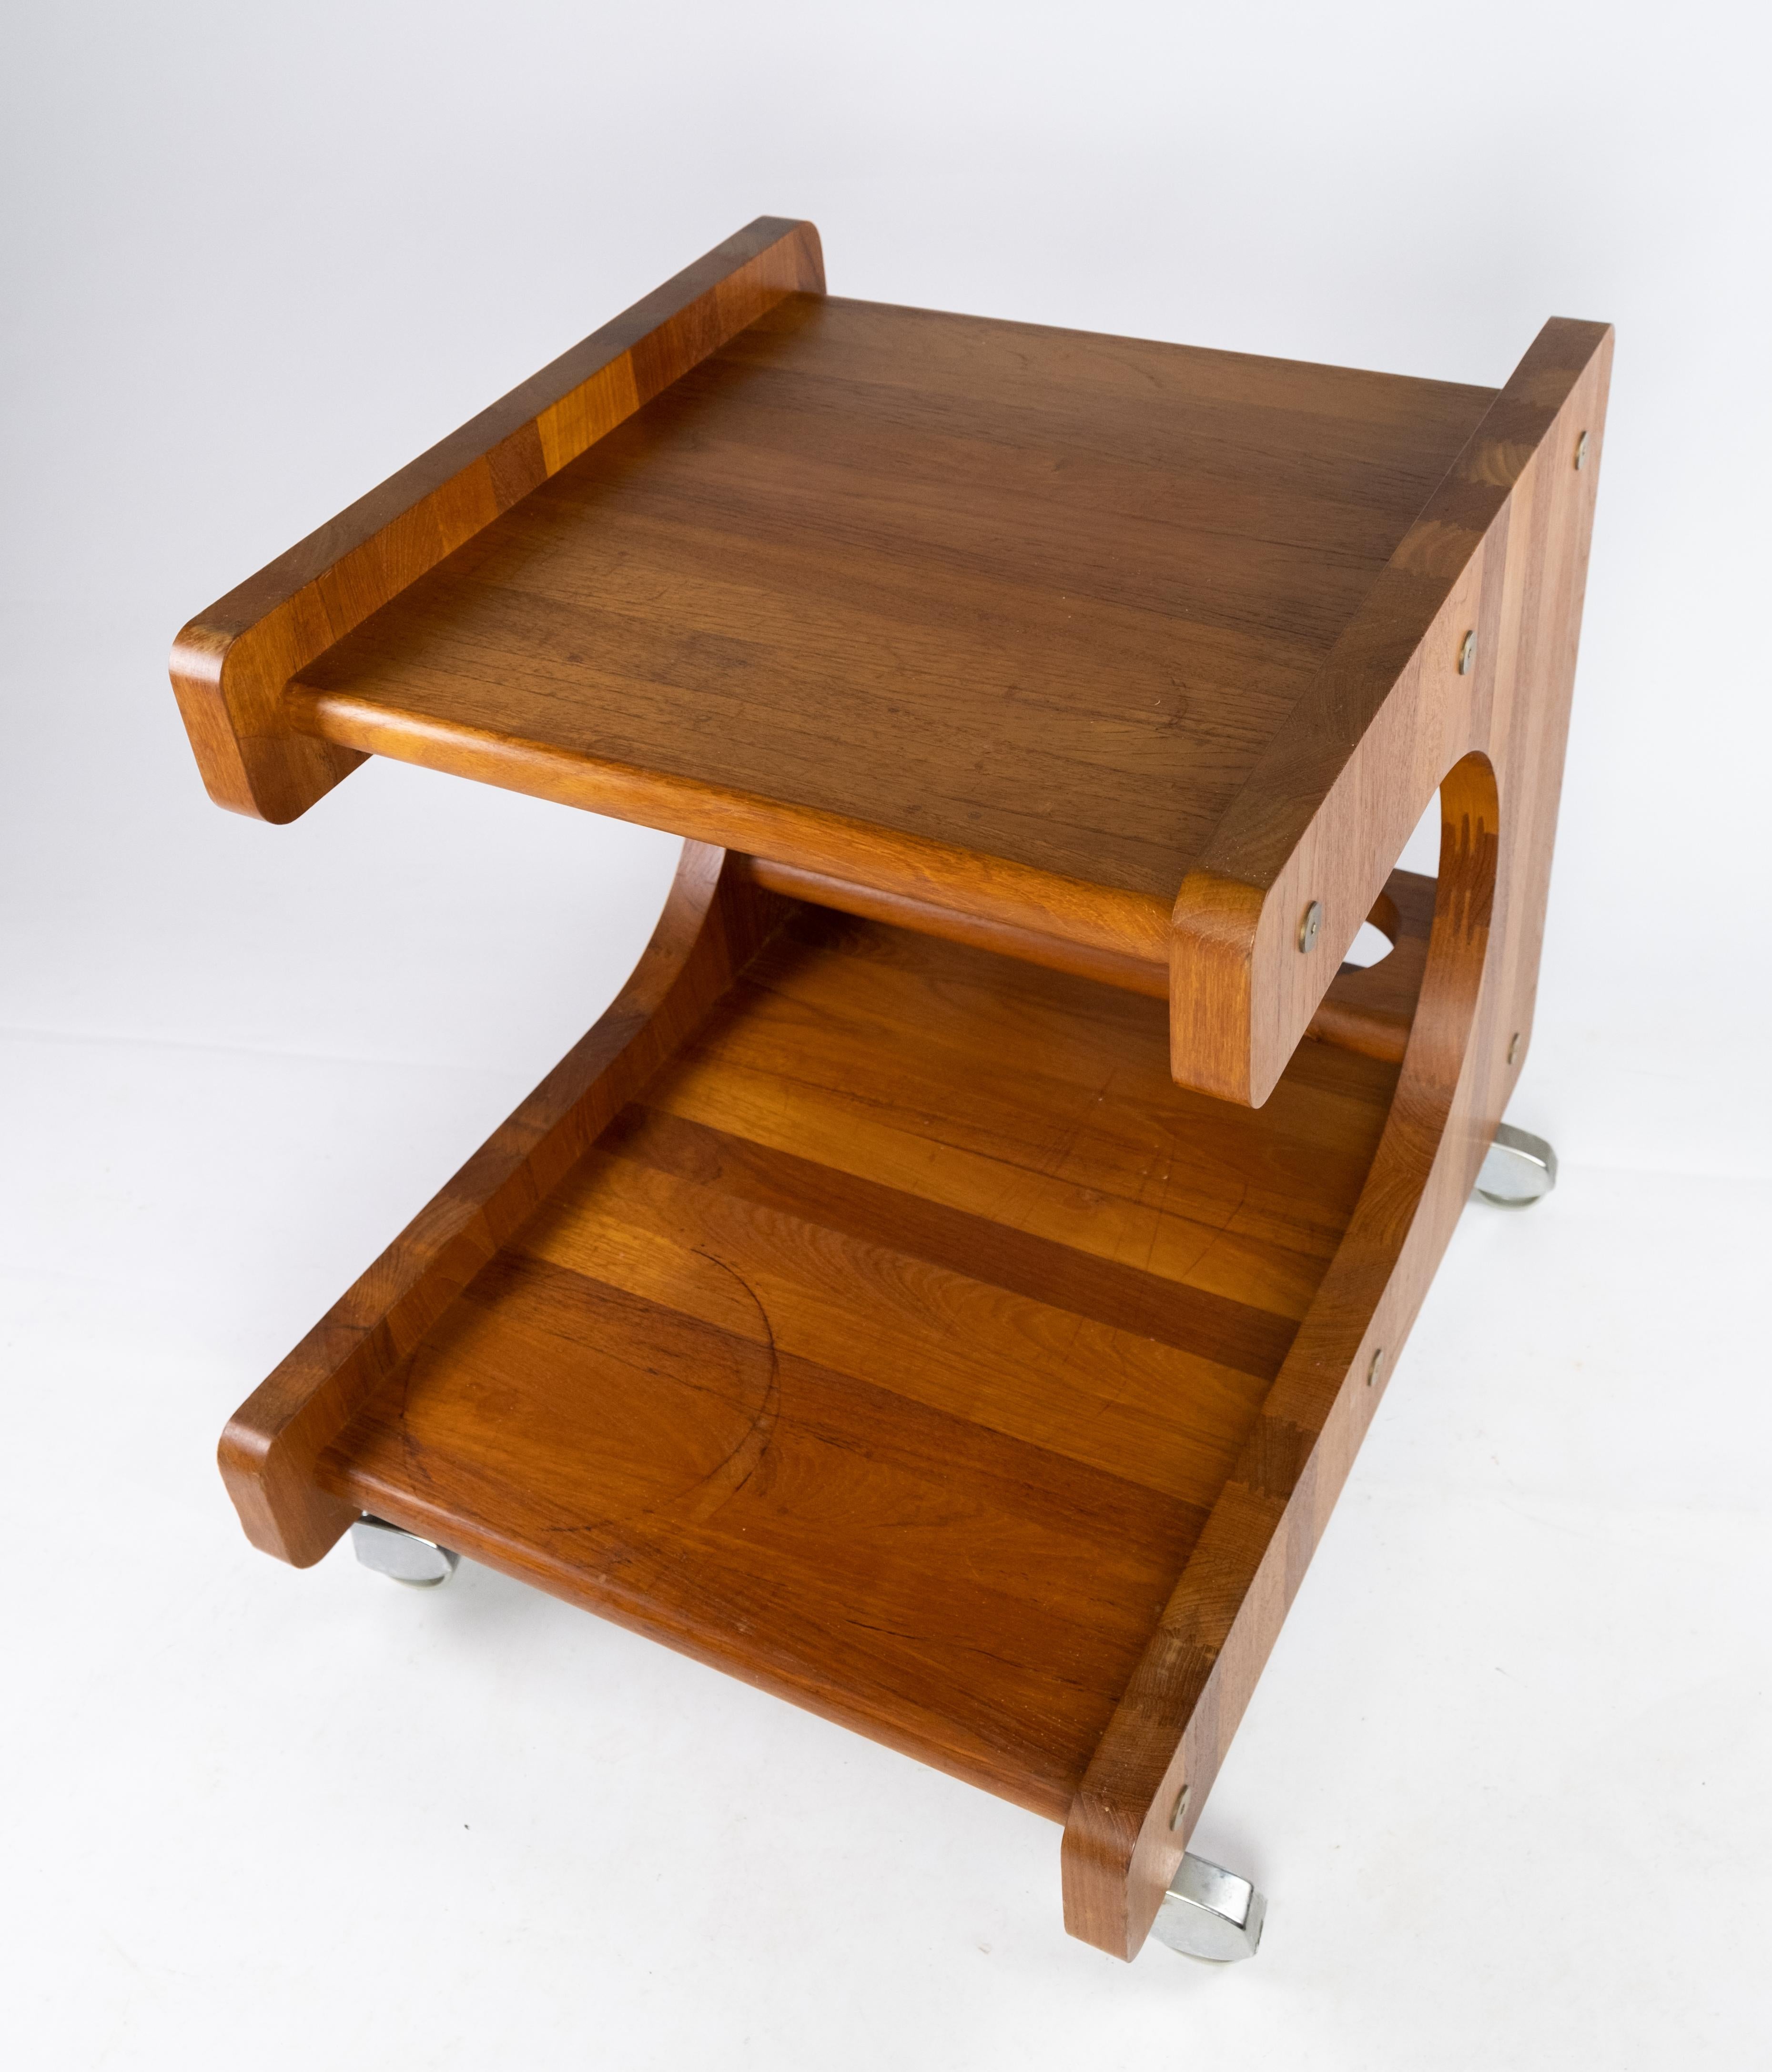 Scandinavian Modern Smaller Tray Table or Bar Cart in Teak of Danish Design from the 1960s